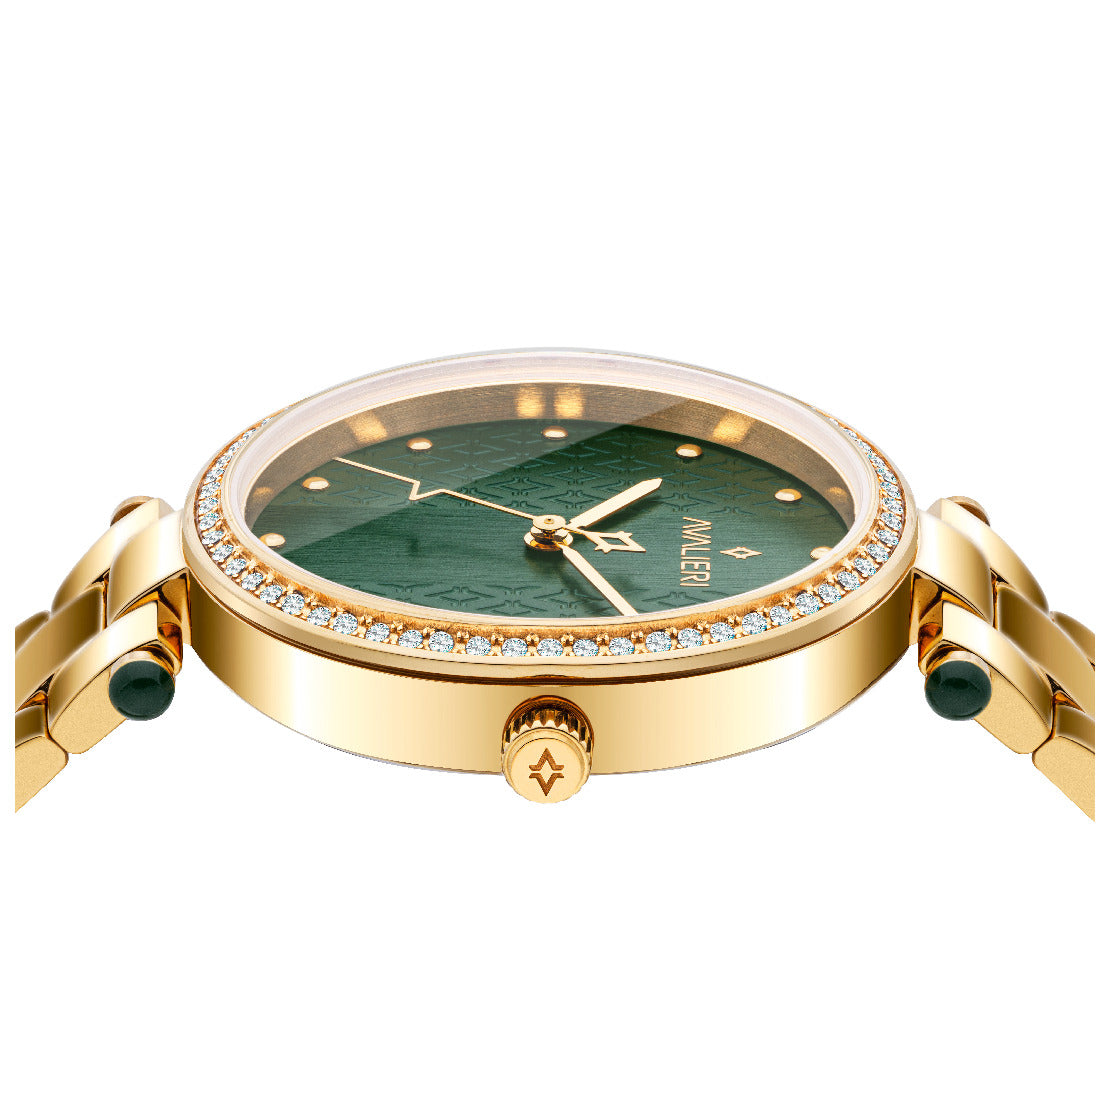 Avalieri Women's Quartz Green Dial Watch - AV-2446B